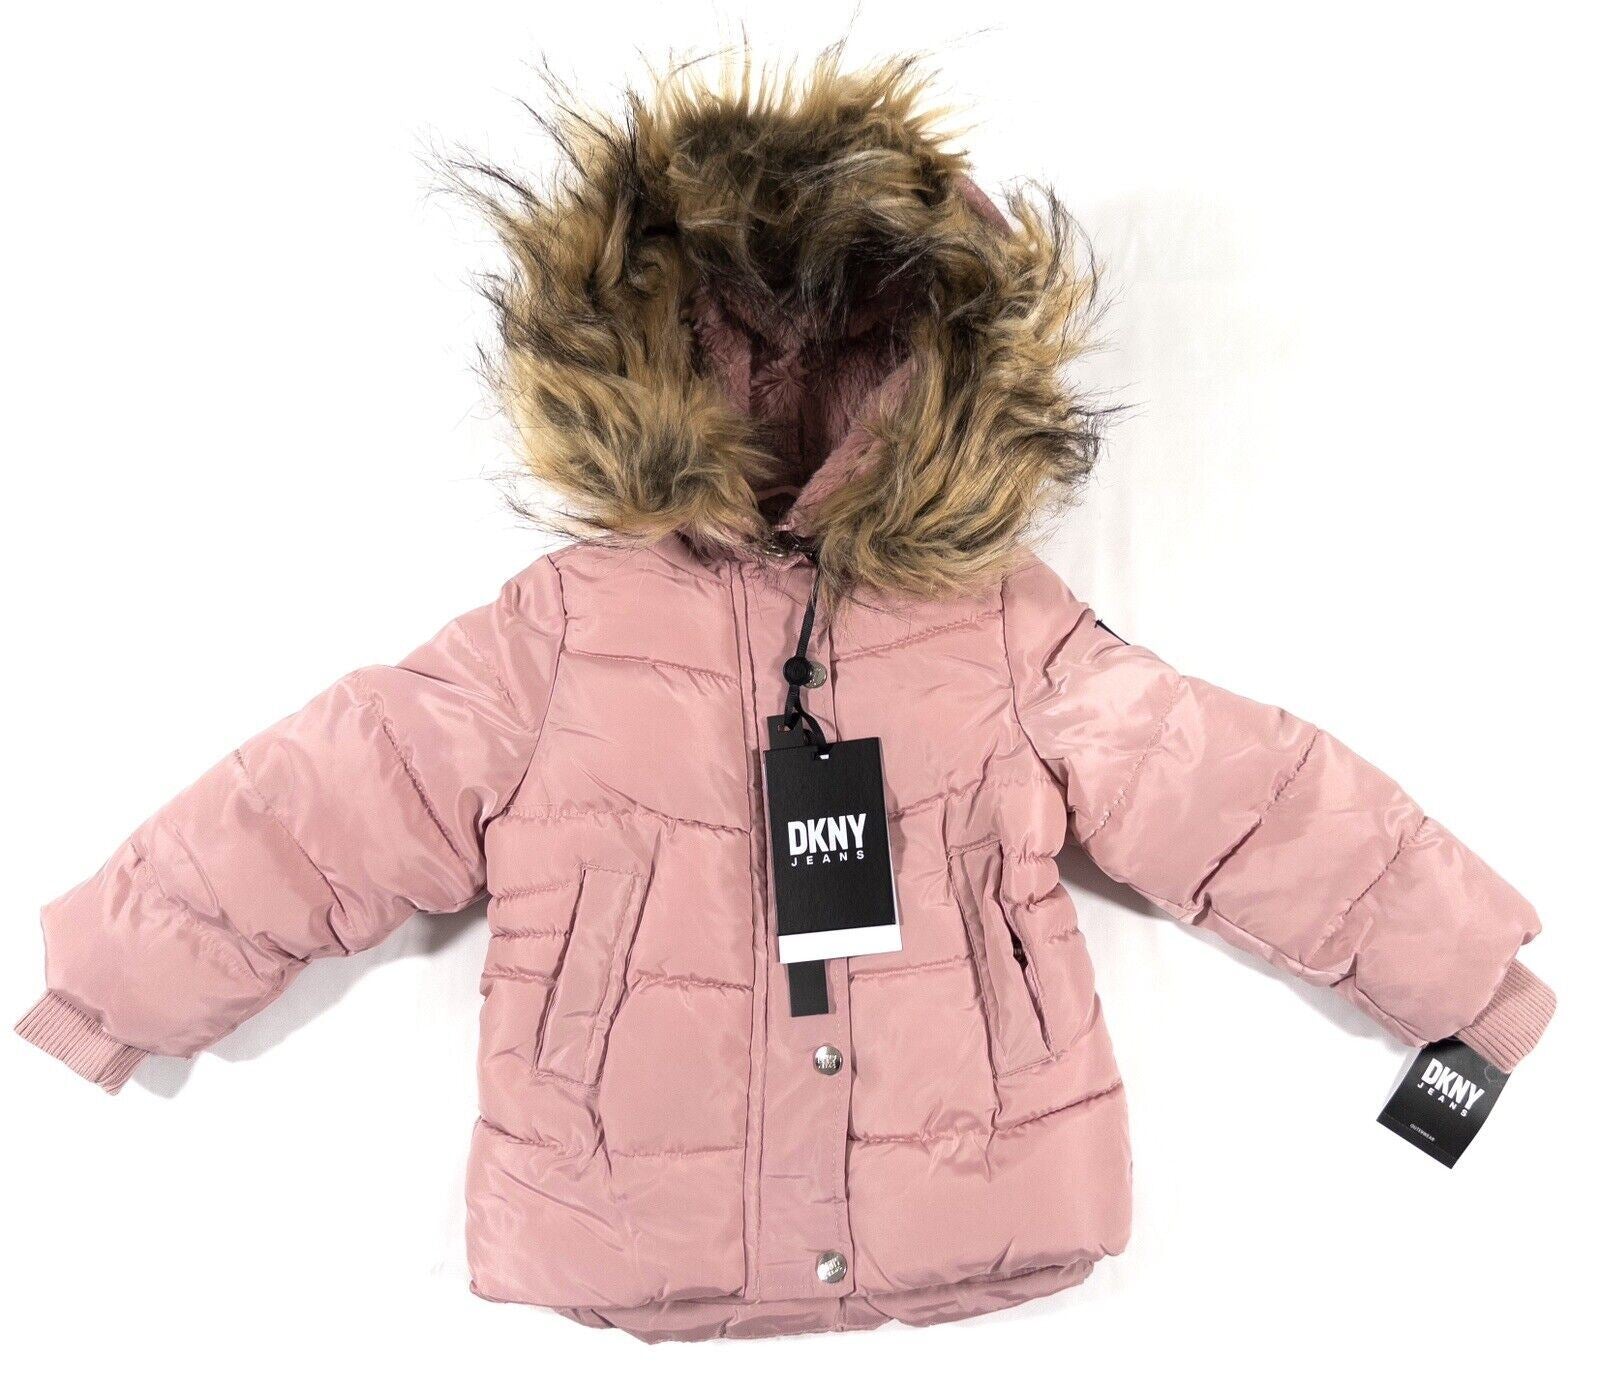 DKNY JEANS Infants Girls Pink Hooded Coat Size UK 18 Months